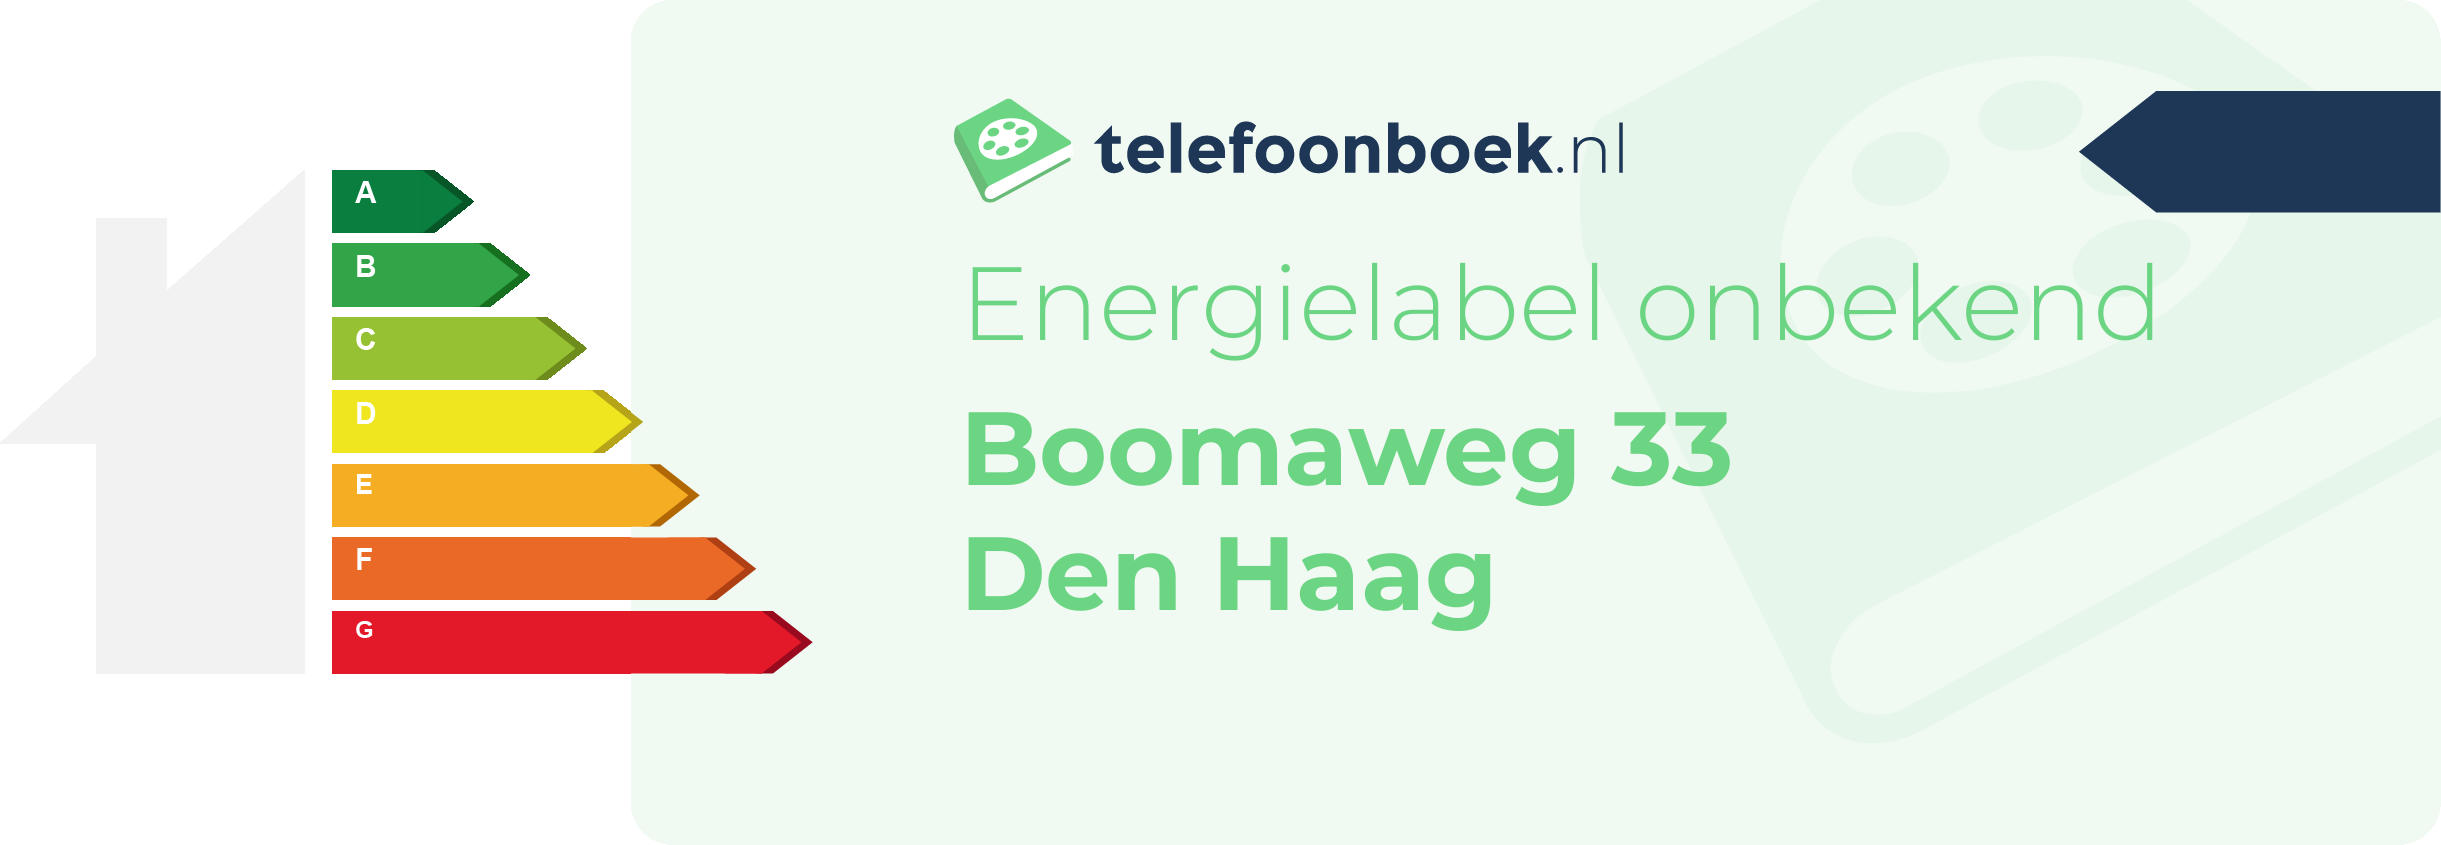 Energielabel Boomaweg 33 Den Haag